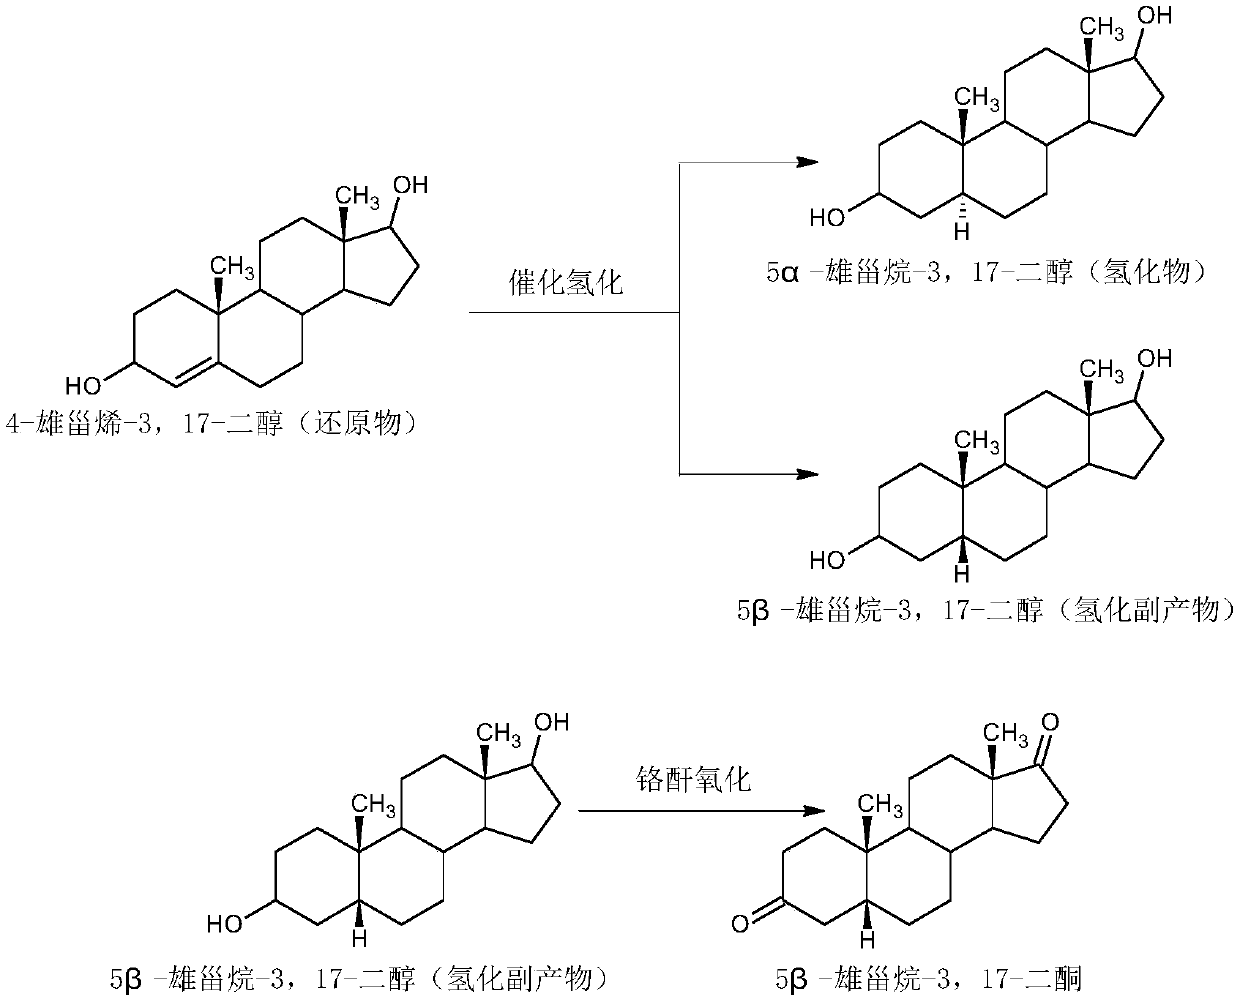 Preparation method of 5alpha-androstane-3,17-dione